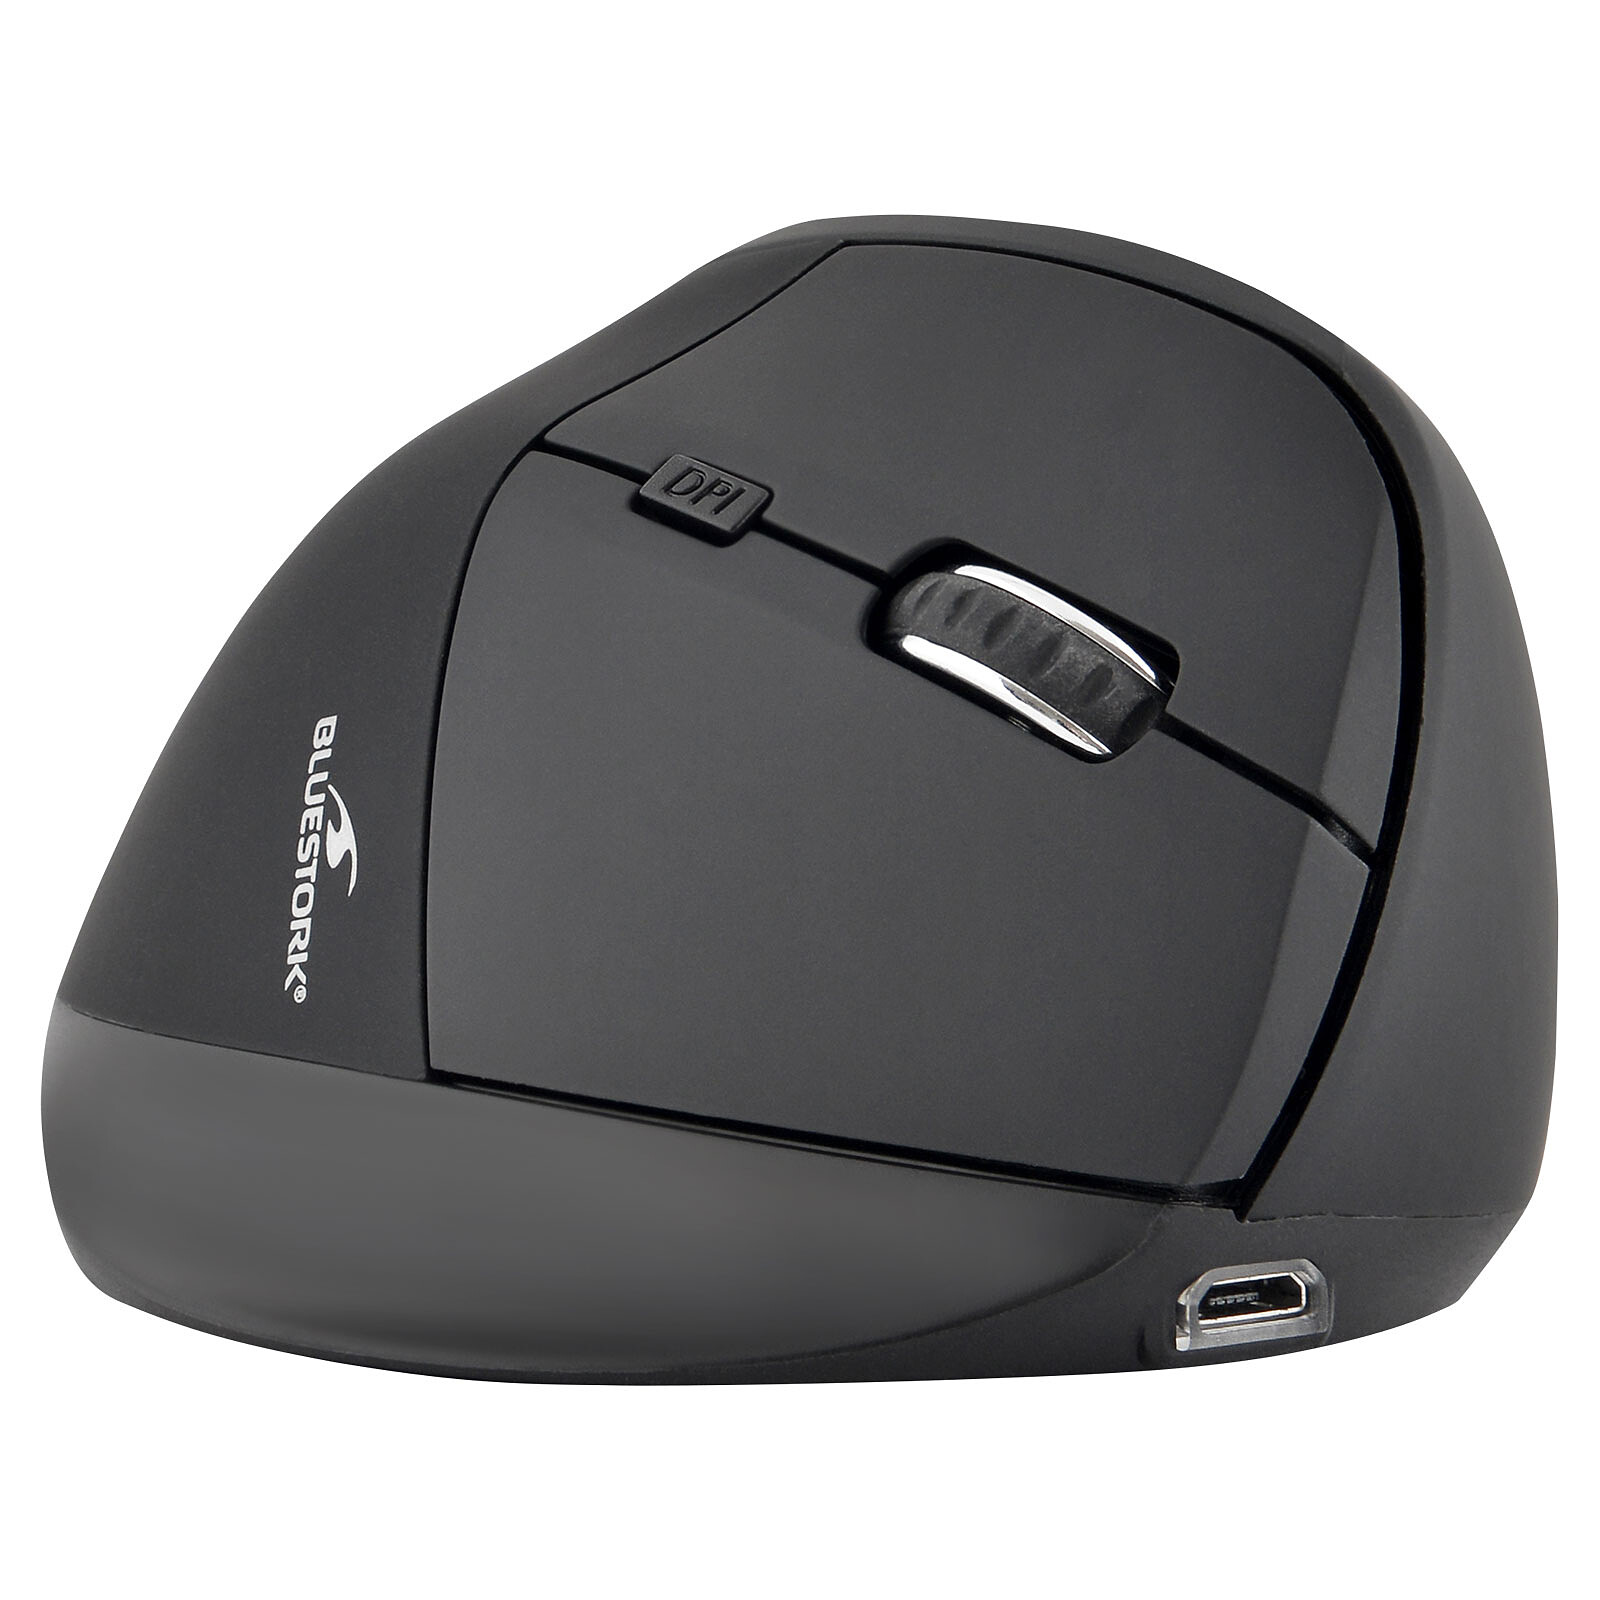 Bluestork Wireless Ergonomic Mouse - Souris PC - Garantie 3 ans LDLC